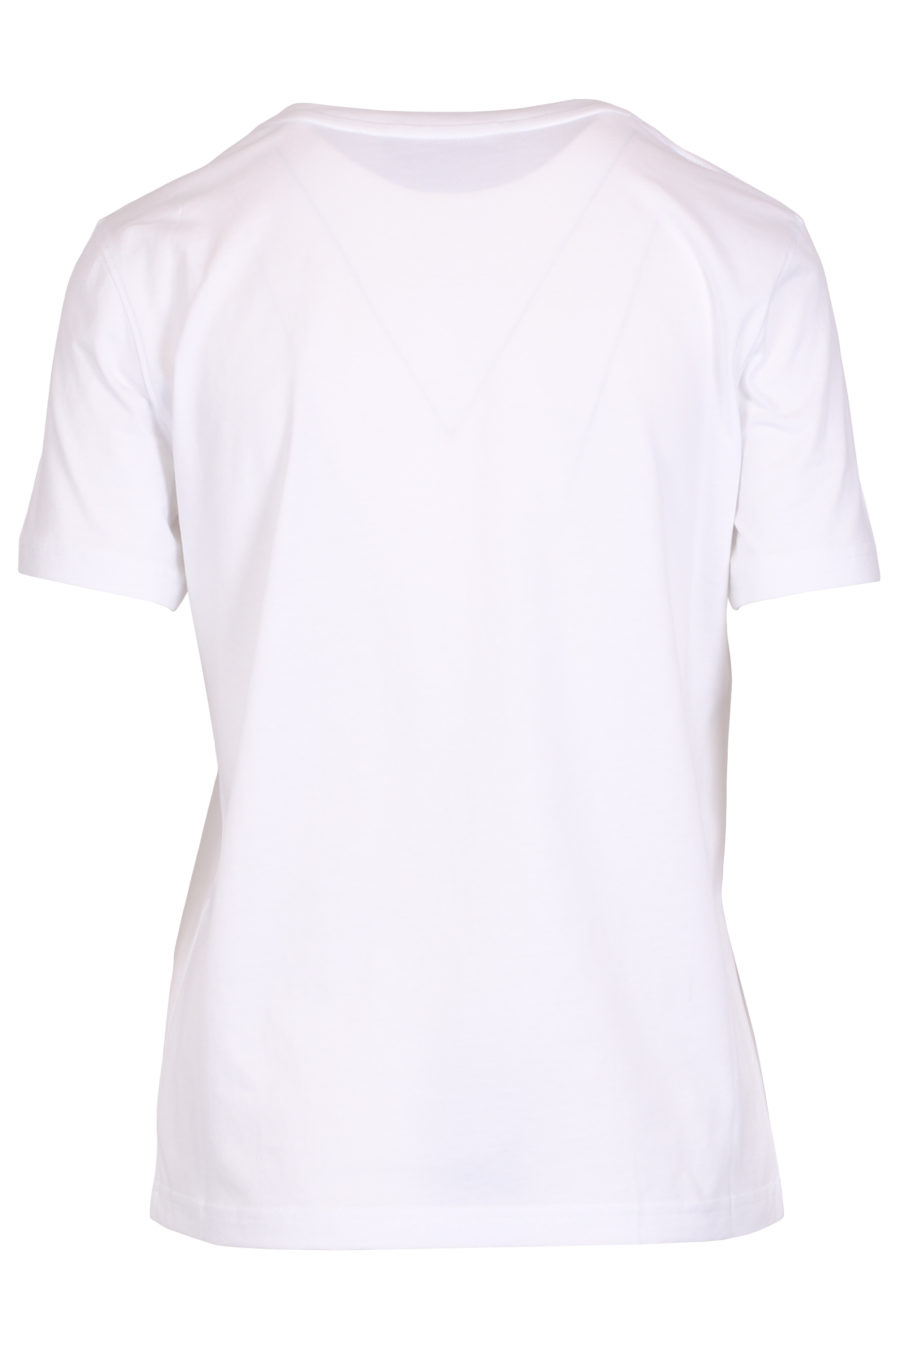 Camiseta blanca con logo brillante - IMG 9325